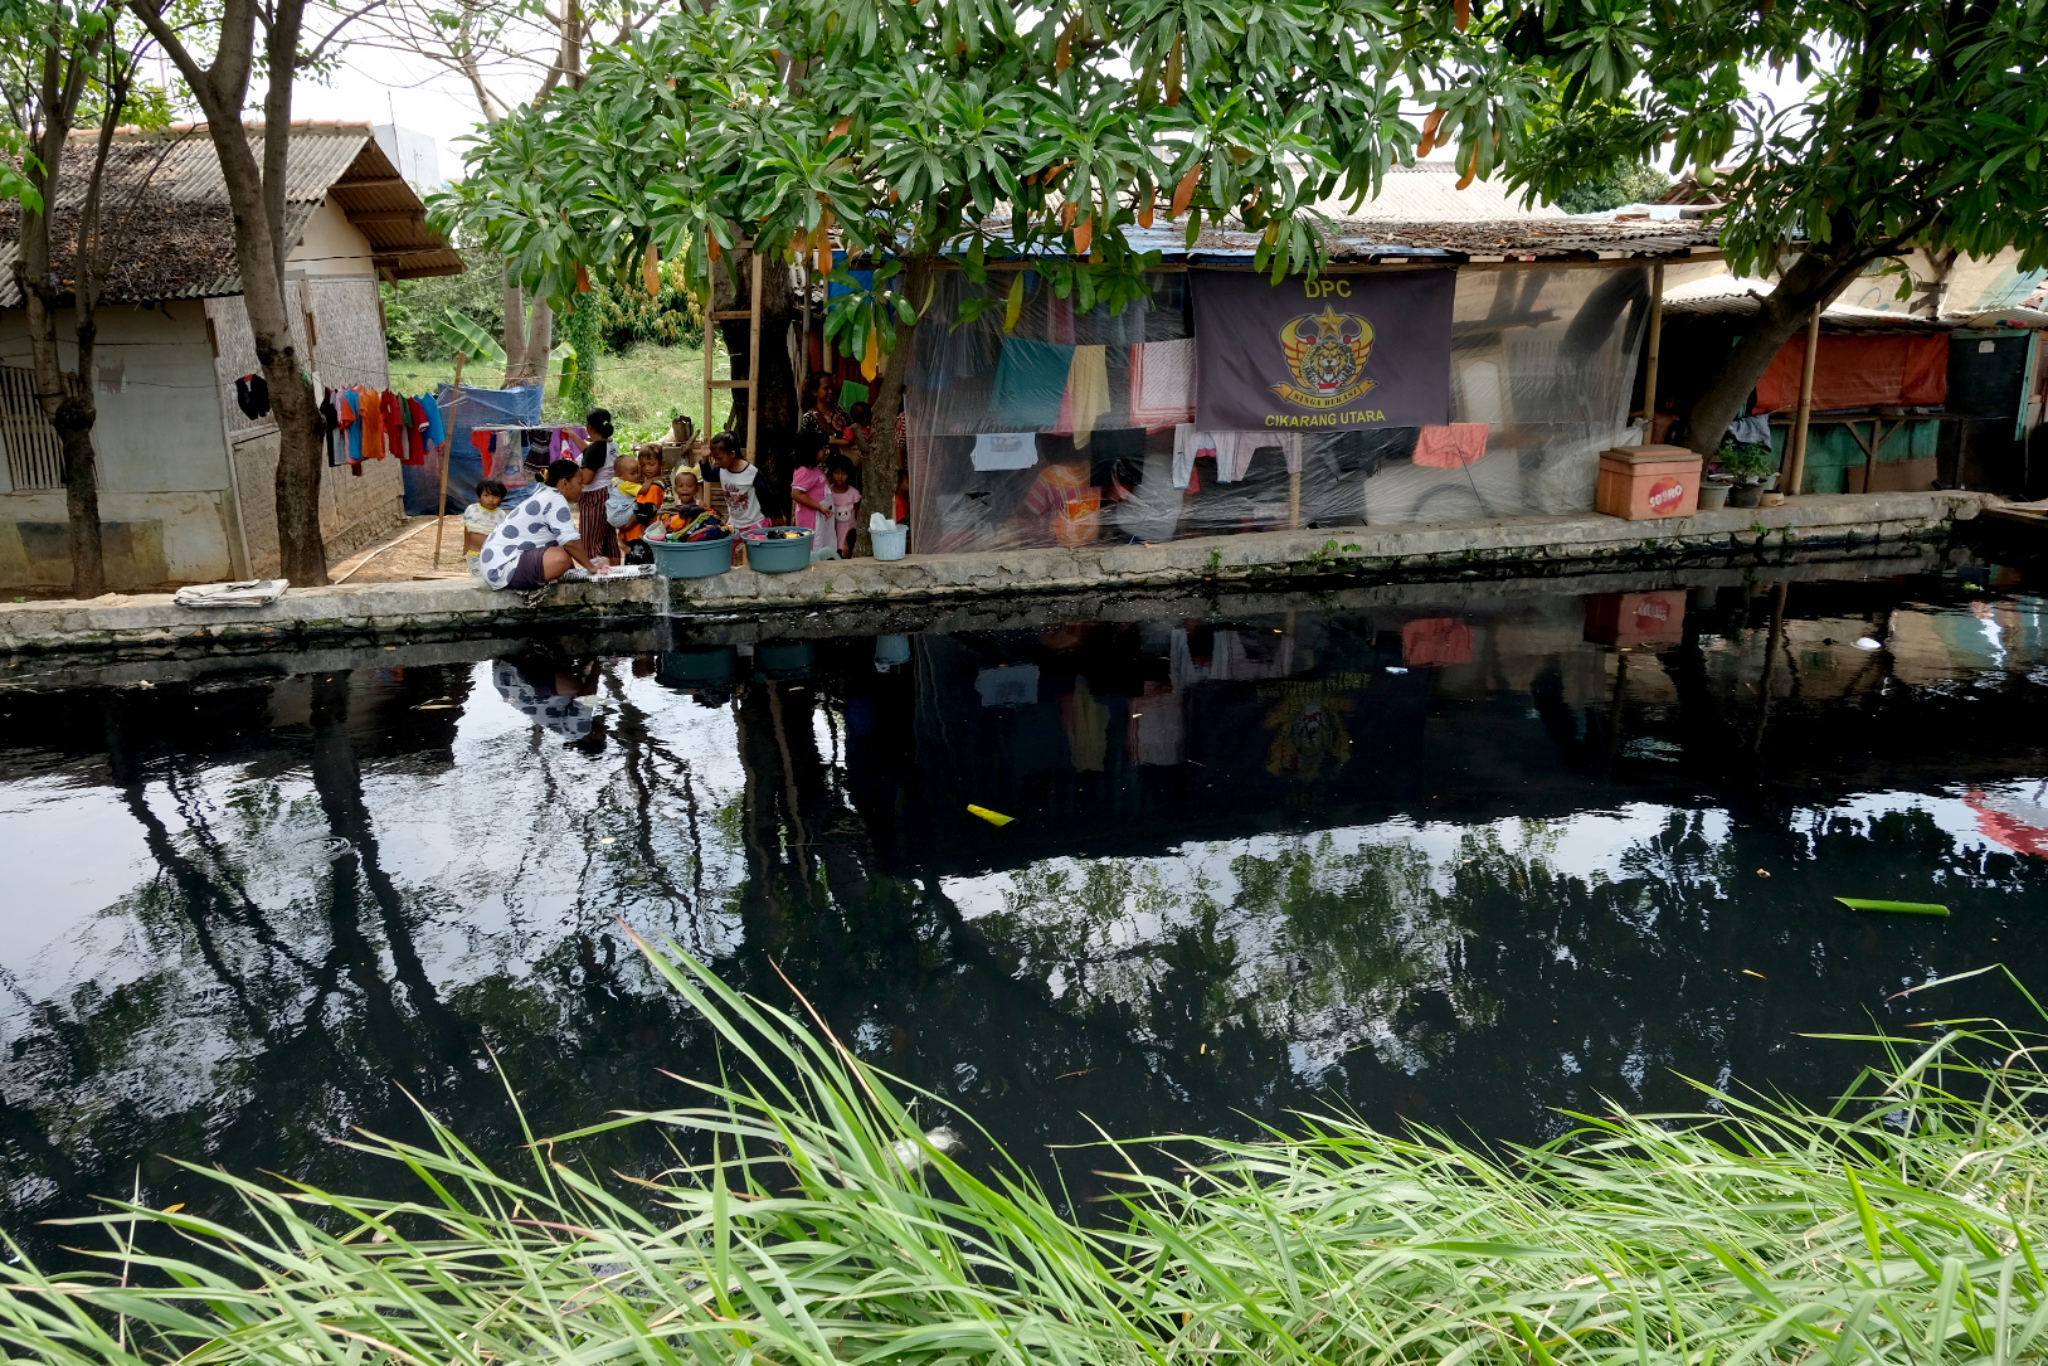 Warga memanfaatkan air kali yang berwana hitam dan berbau tak sedap untuk mencuci di Desa Sukaraya, Karangbahagia, Kabupaten Bekasi, Jawa Barat, Selasa, 7 November 2021. Foto: Ismail Pohan/TrenAsia